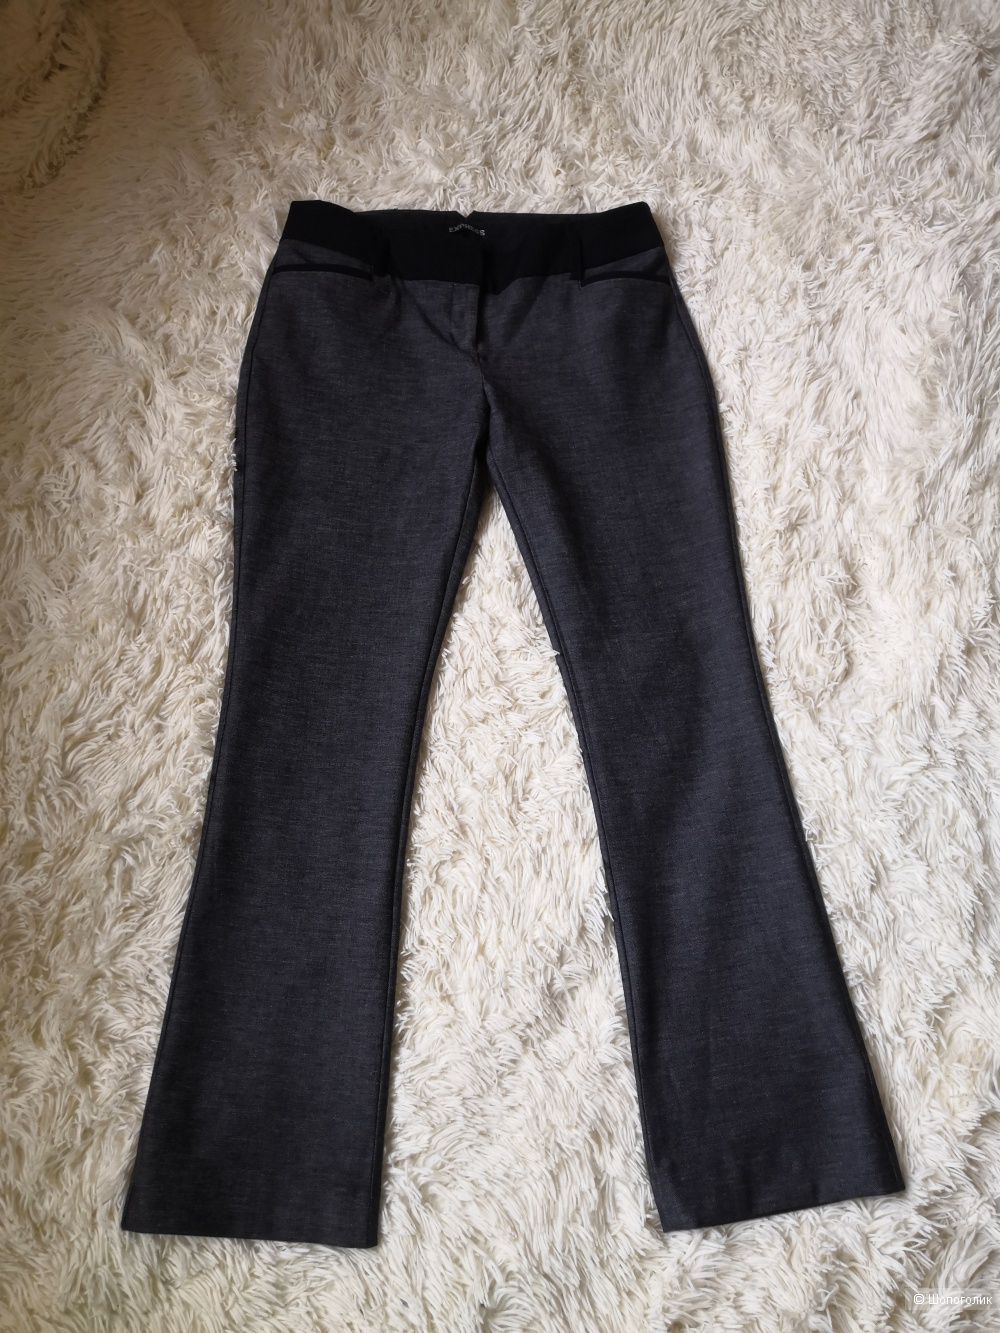 Комплект брюки Express, поло Guess, размер 42-44